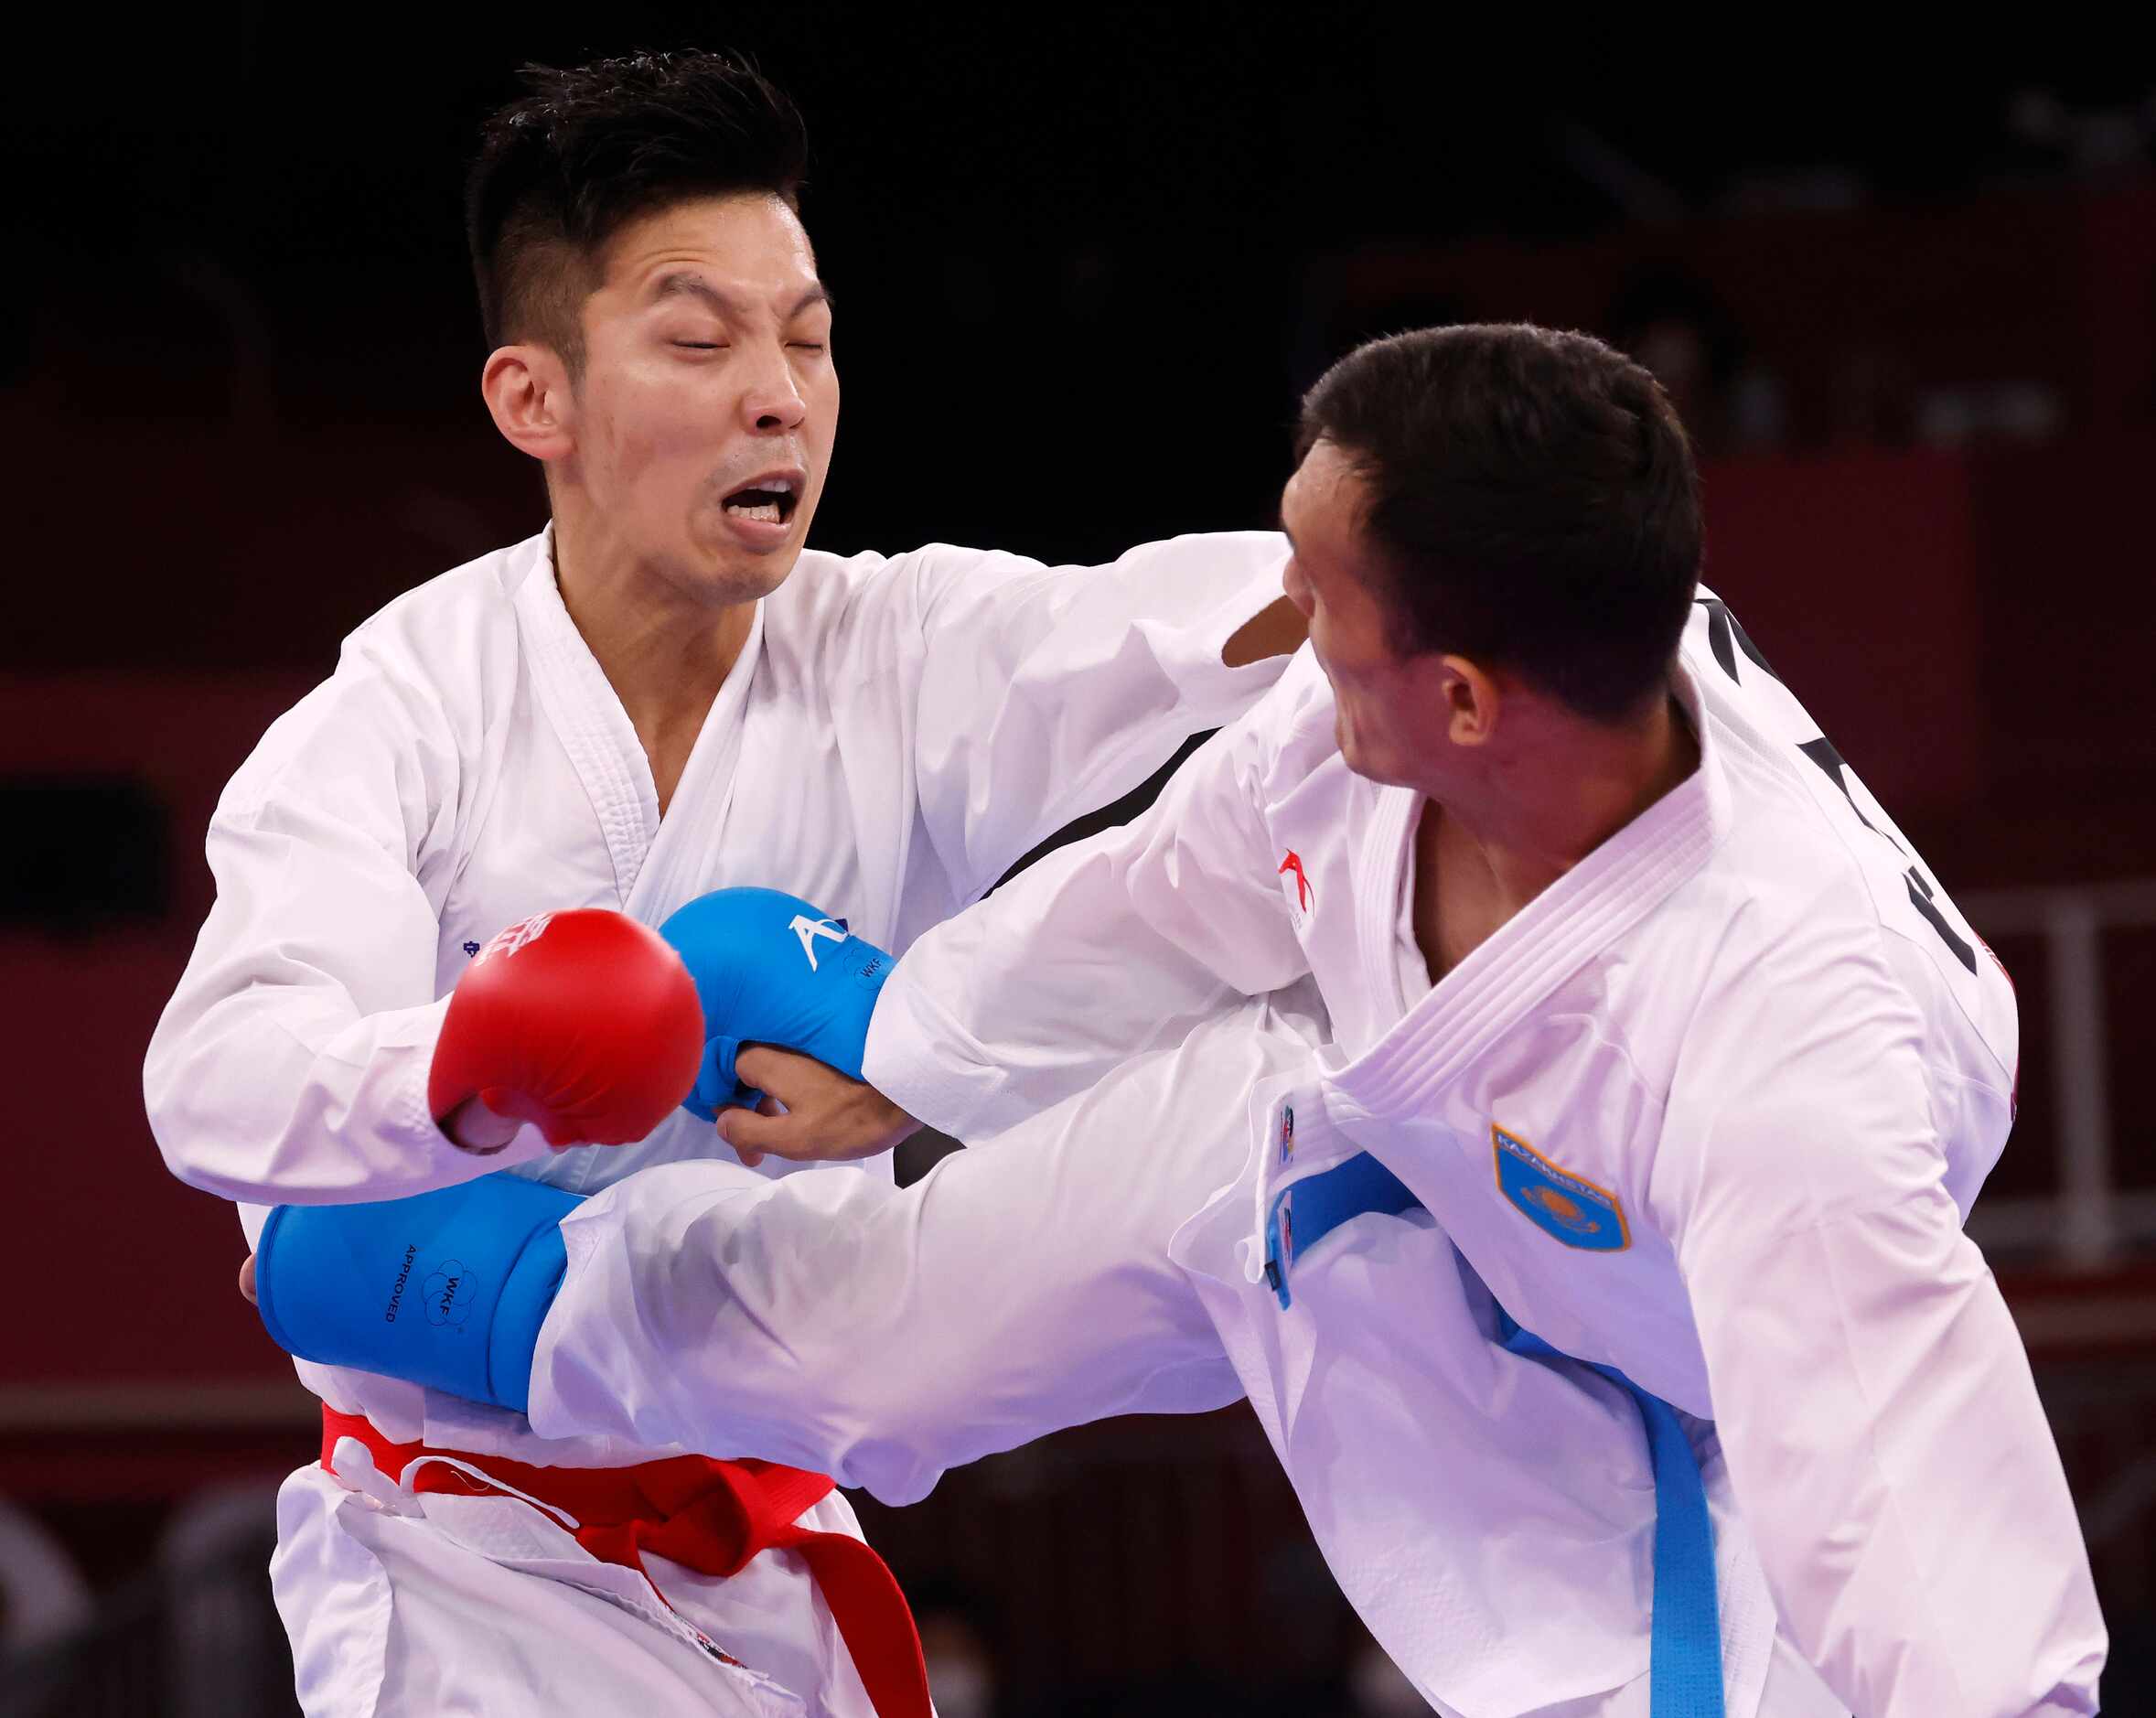 Kazakhstan’s Nurkanat Azhikanov kicks Australia’s Tsuneari Yahiro in the torso during the...